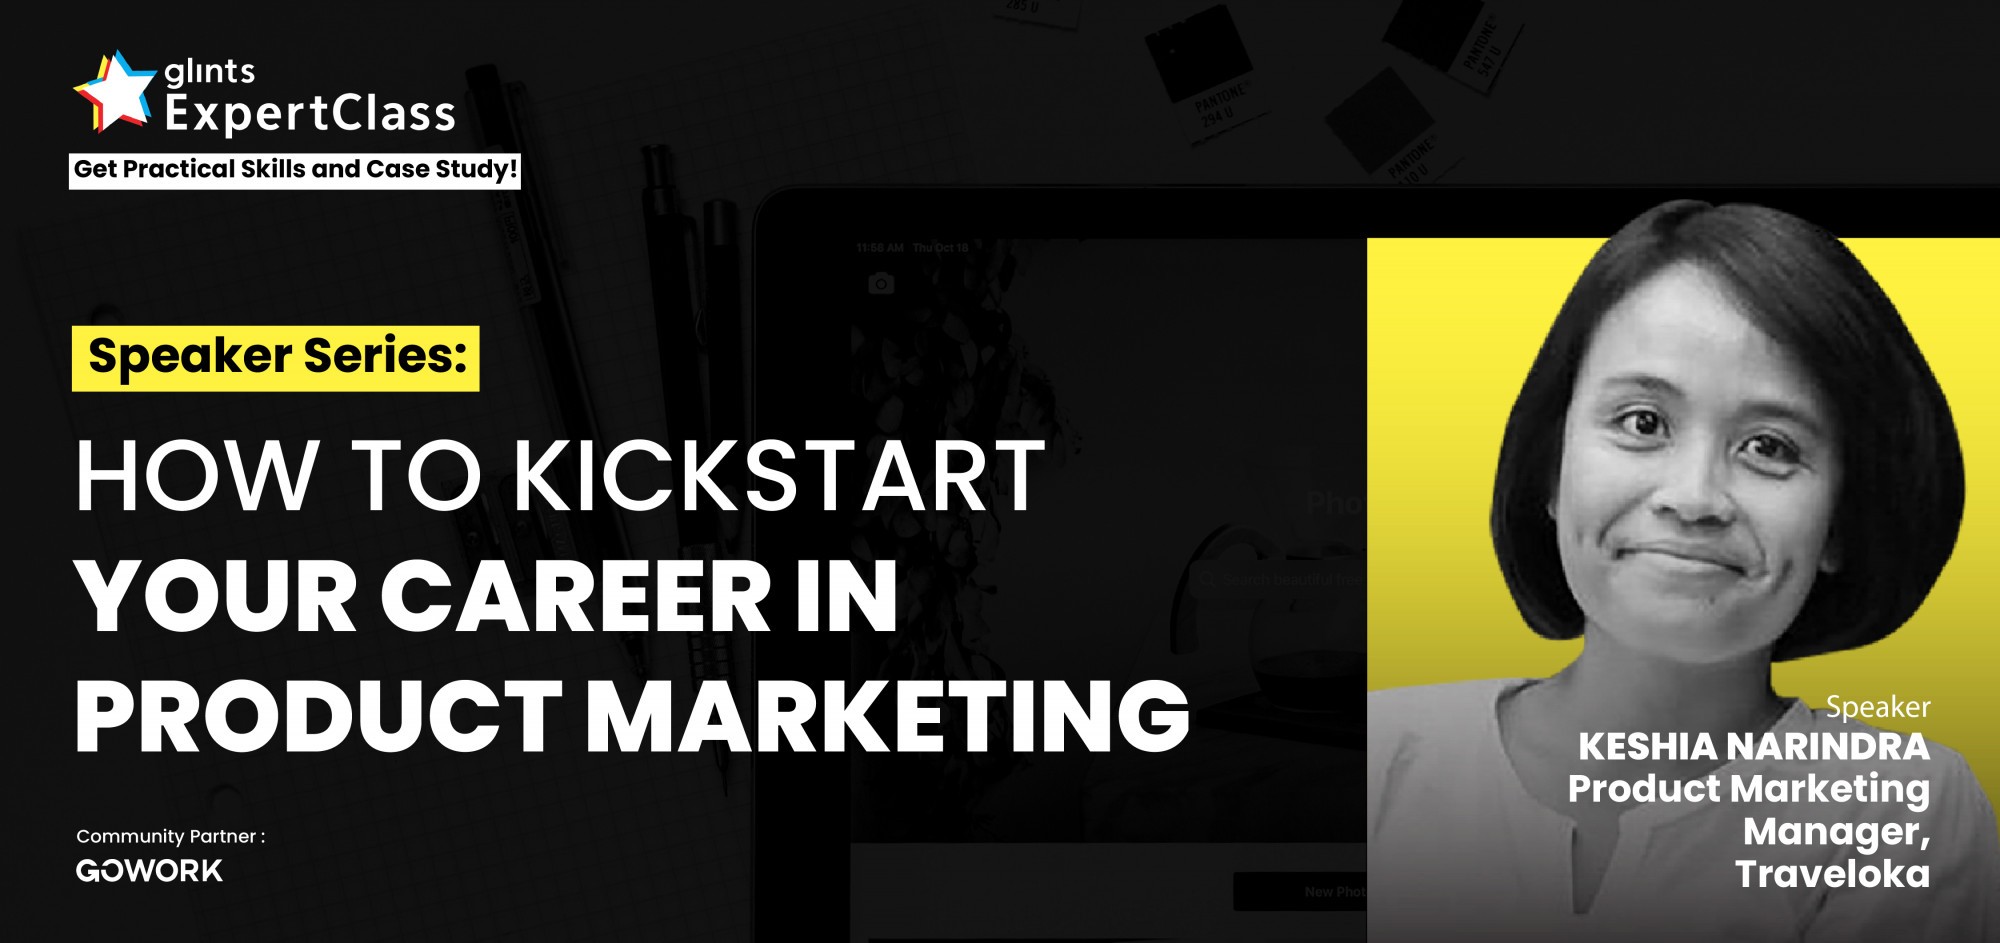 [Online Glints ExpertClass] How to Kickstart Your Career in Product Marketing